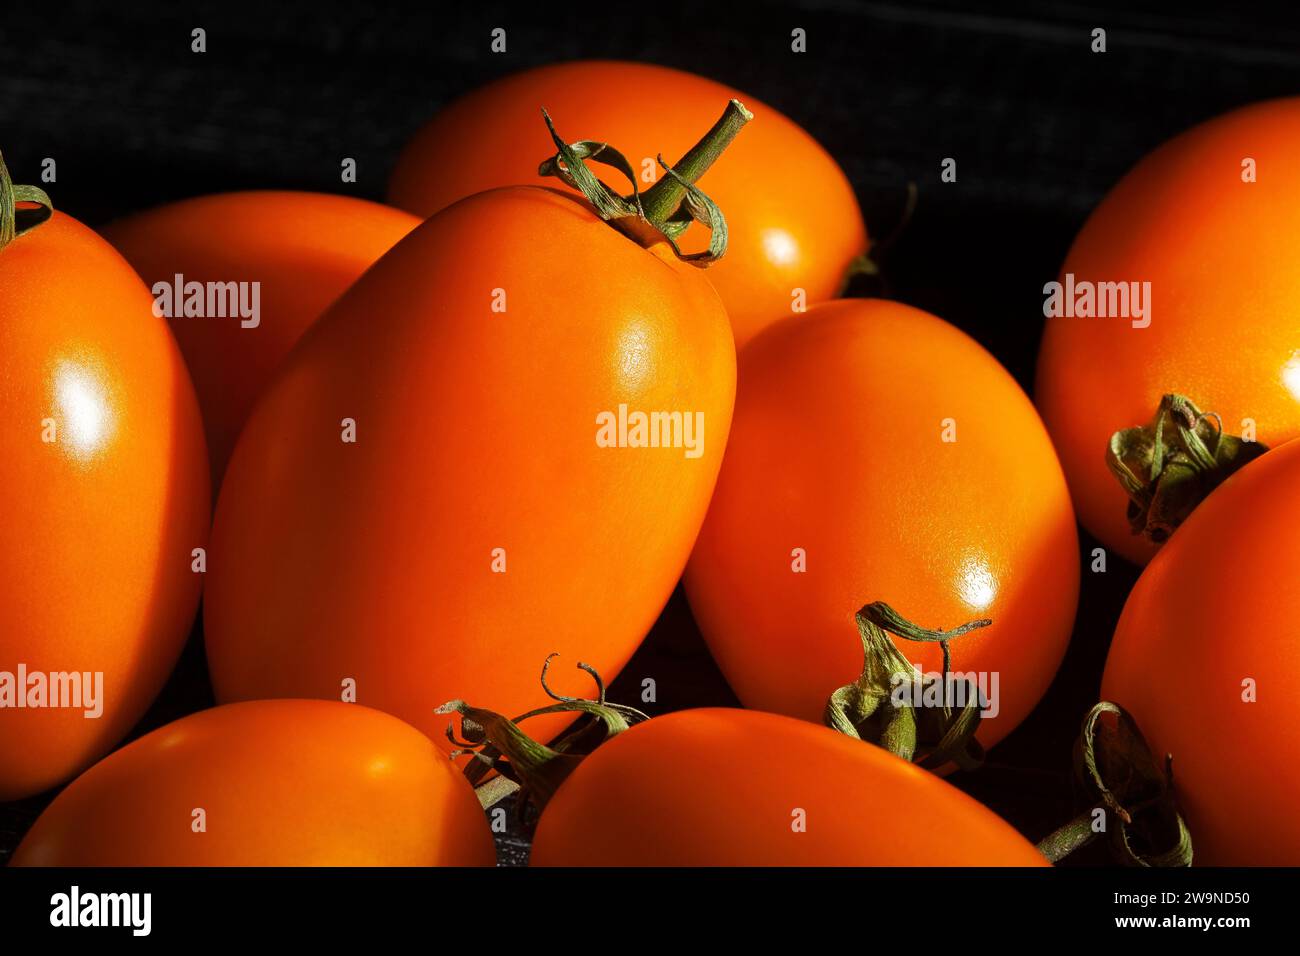 orange plum tomato on black background Stock Photo